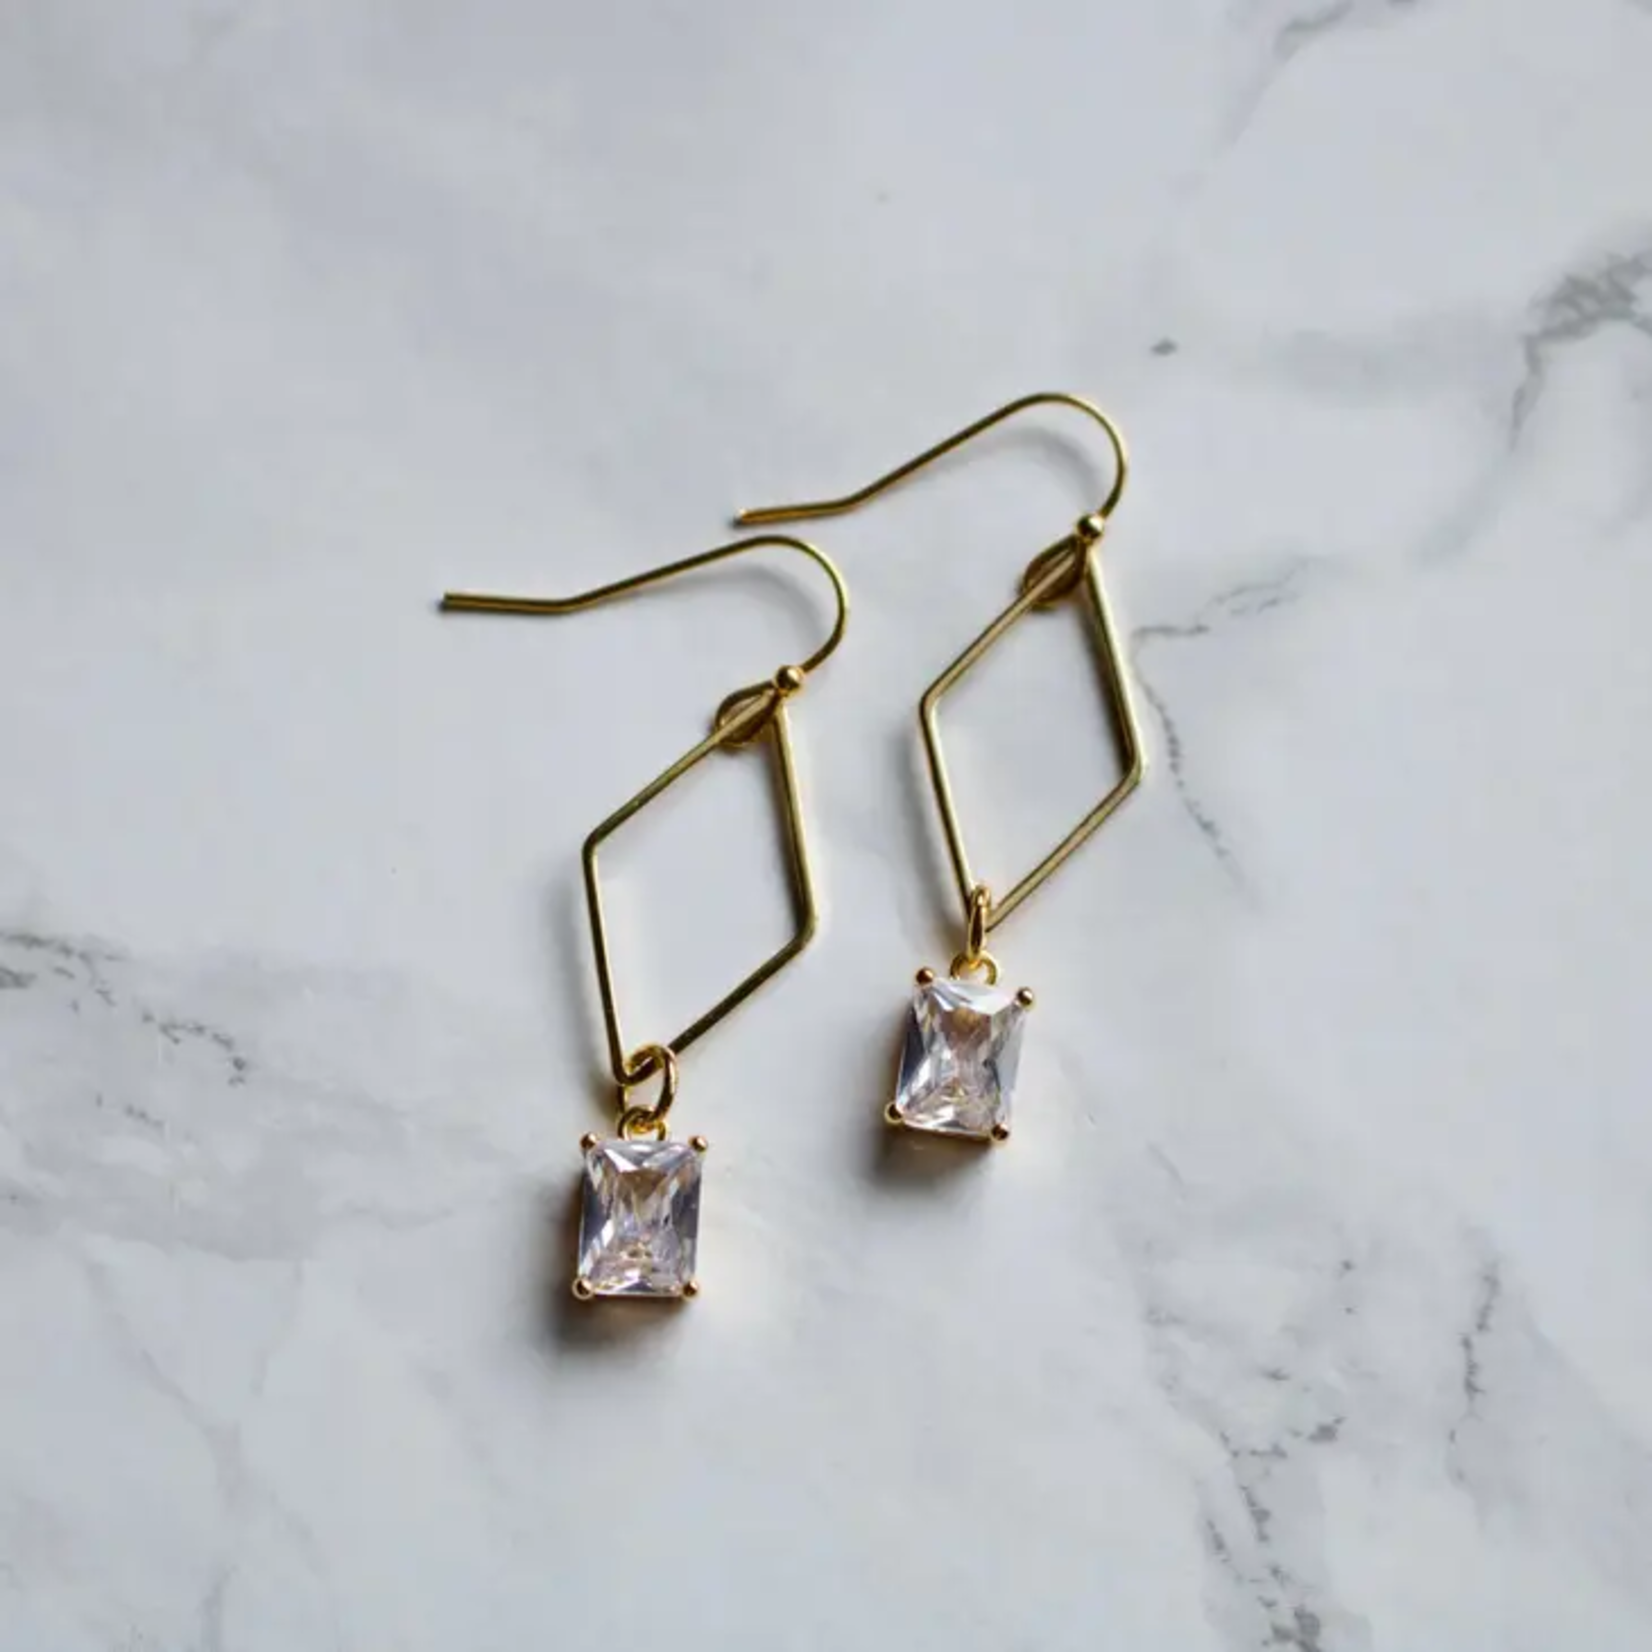 Tish Jewelry Earrings Gold Diamond w Rhinestone